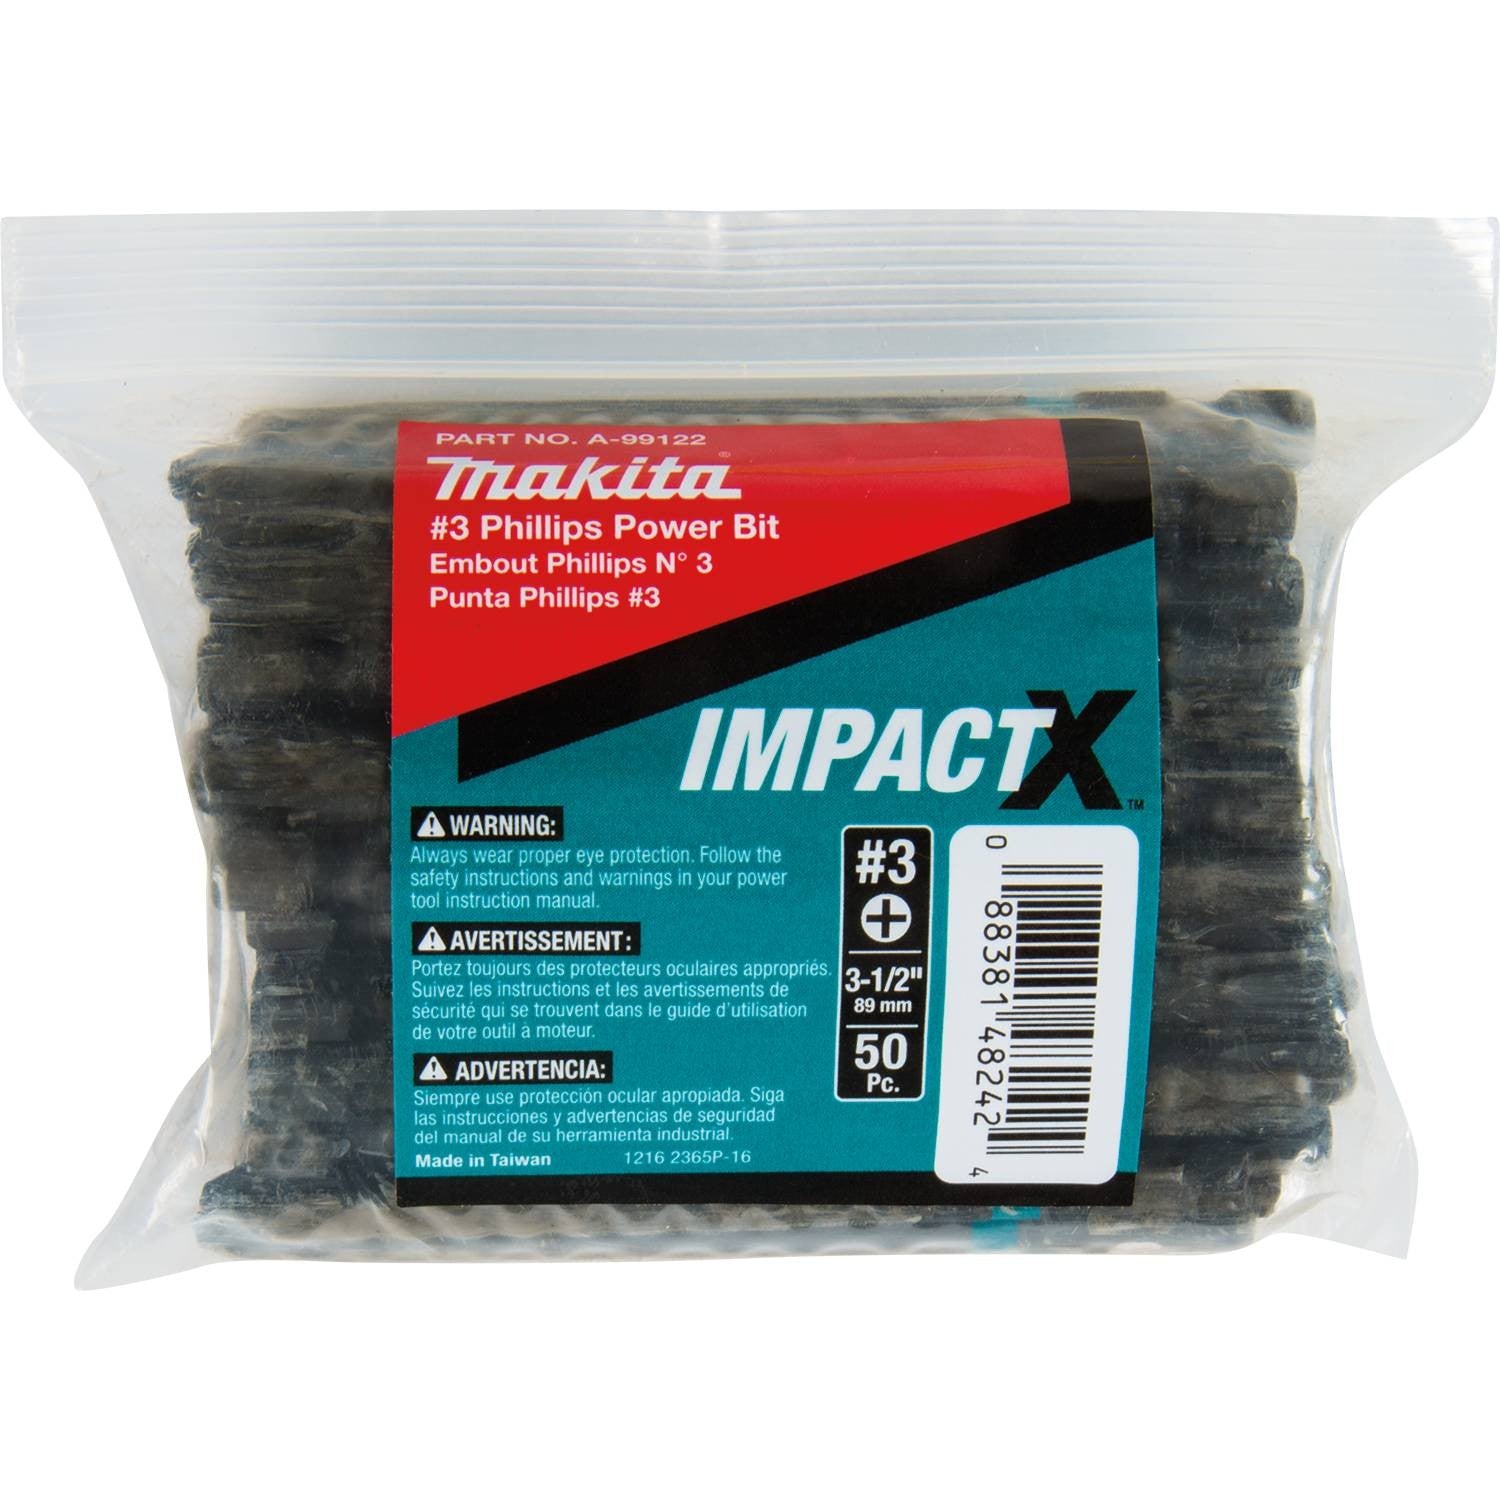 Makita A-99122 ImpactX  #3 Phillips 3-1/2